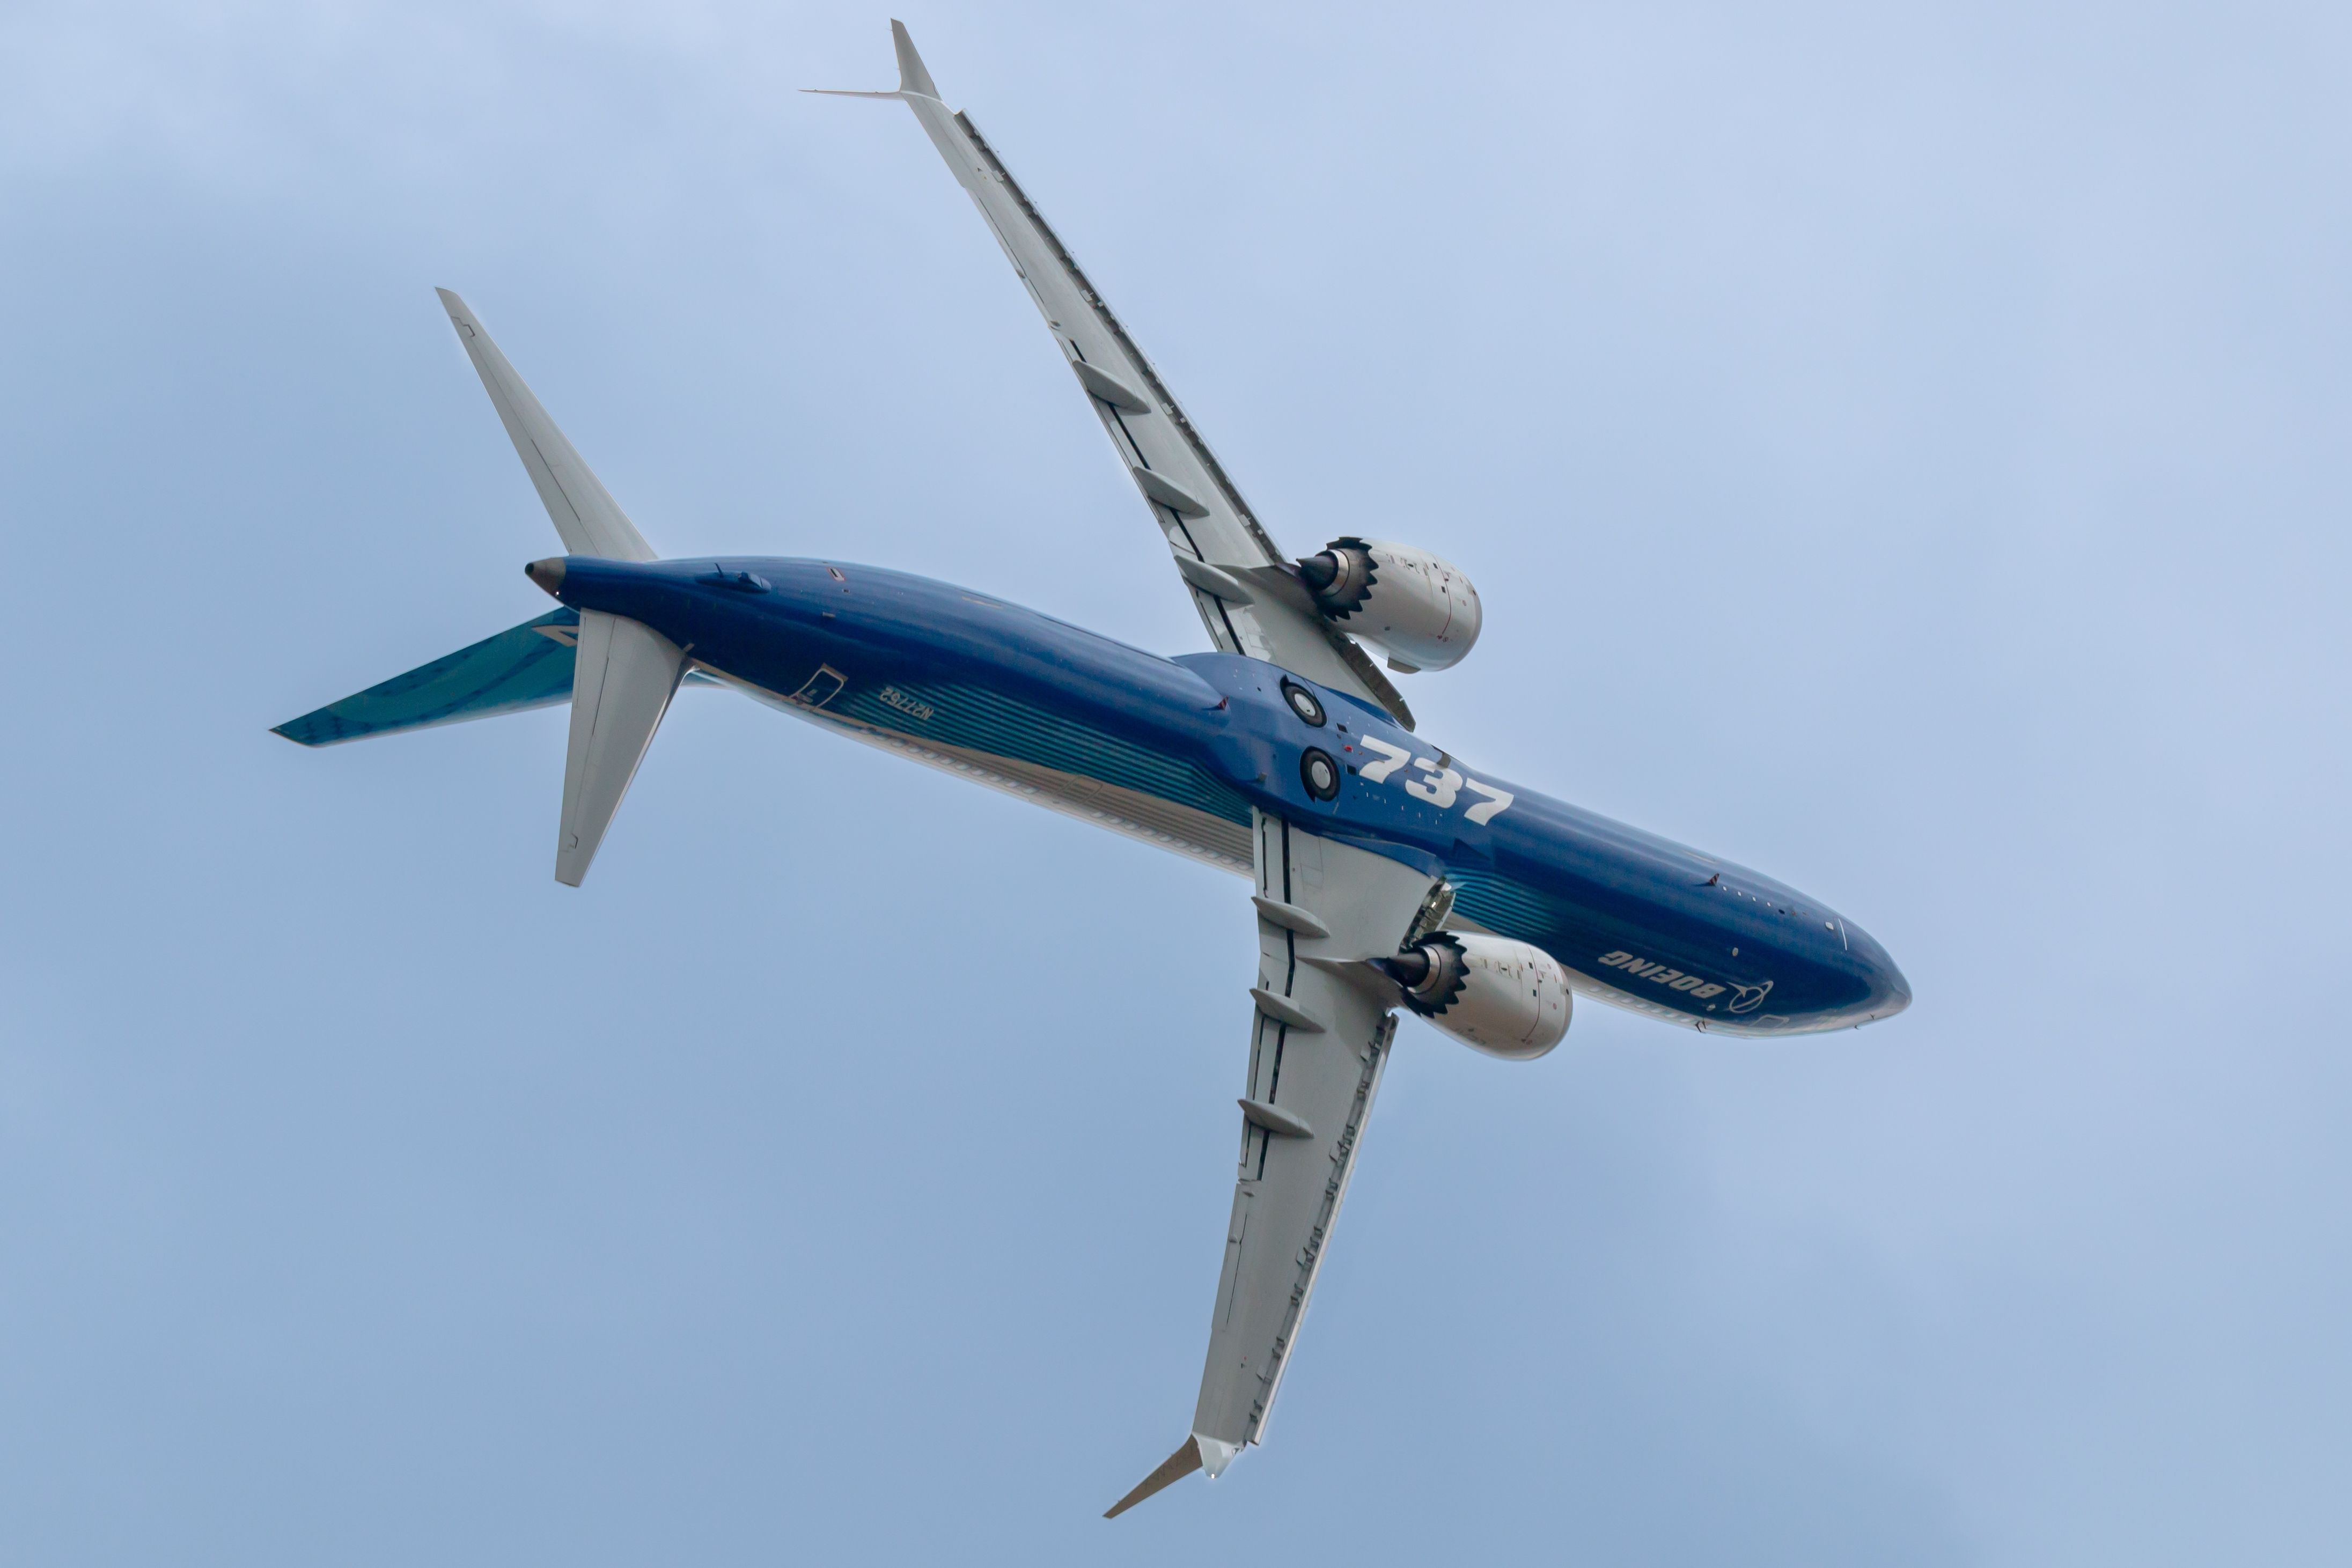 Boeing 737 MAX 10